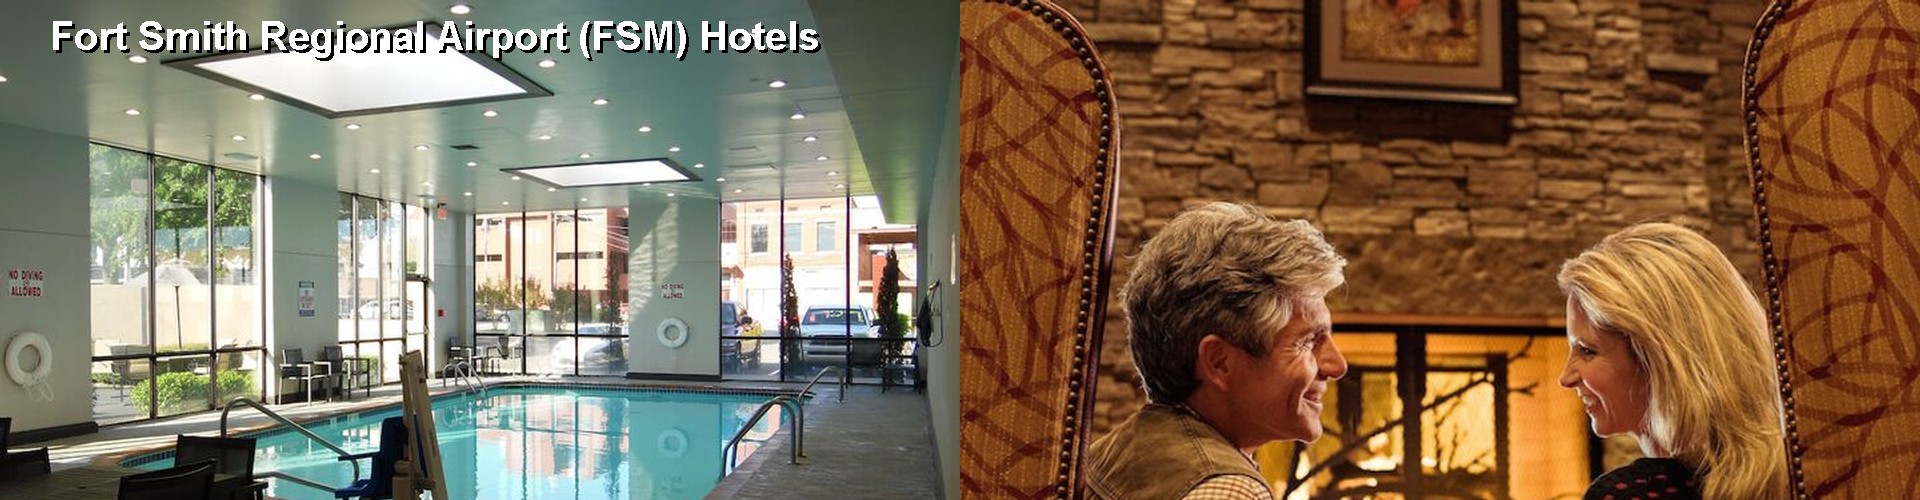 5 Best Hotels near Fort Smith Regional Airport (FSM)